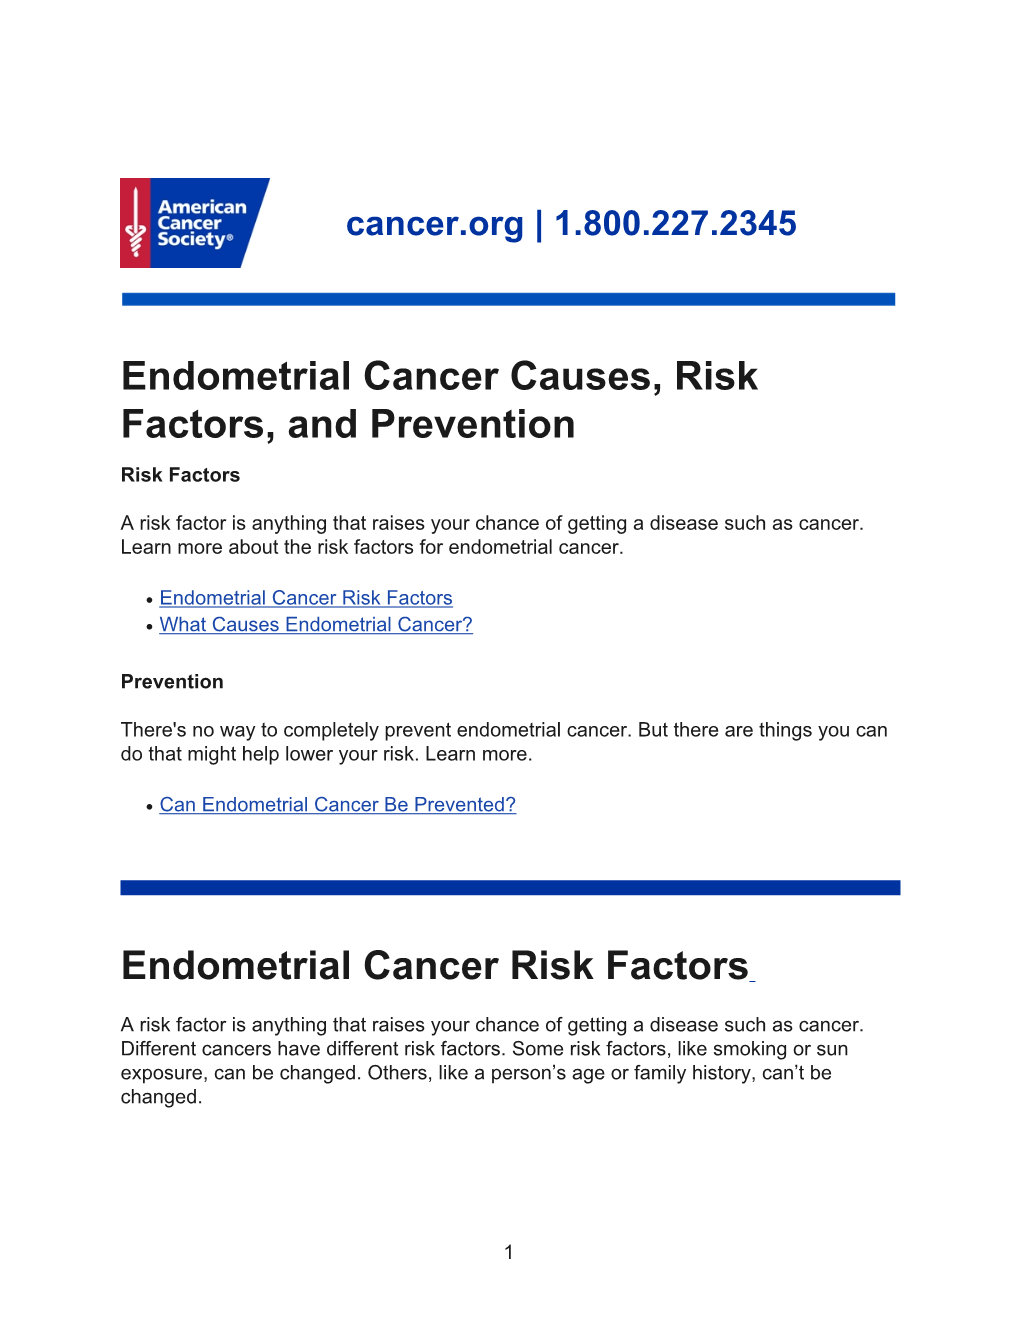 Endometrial Cancer Causes, Risk Factors, and Prevention Risk Factors